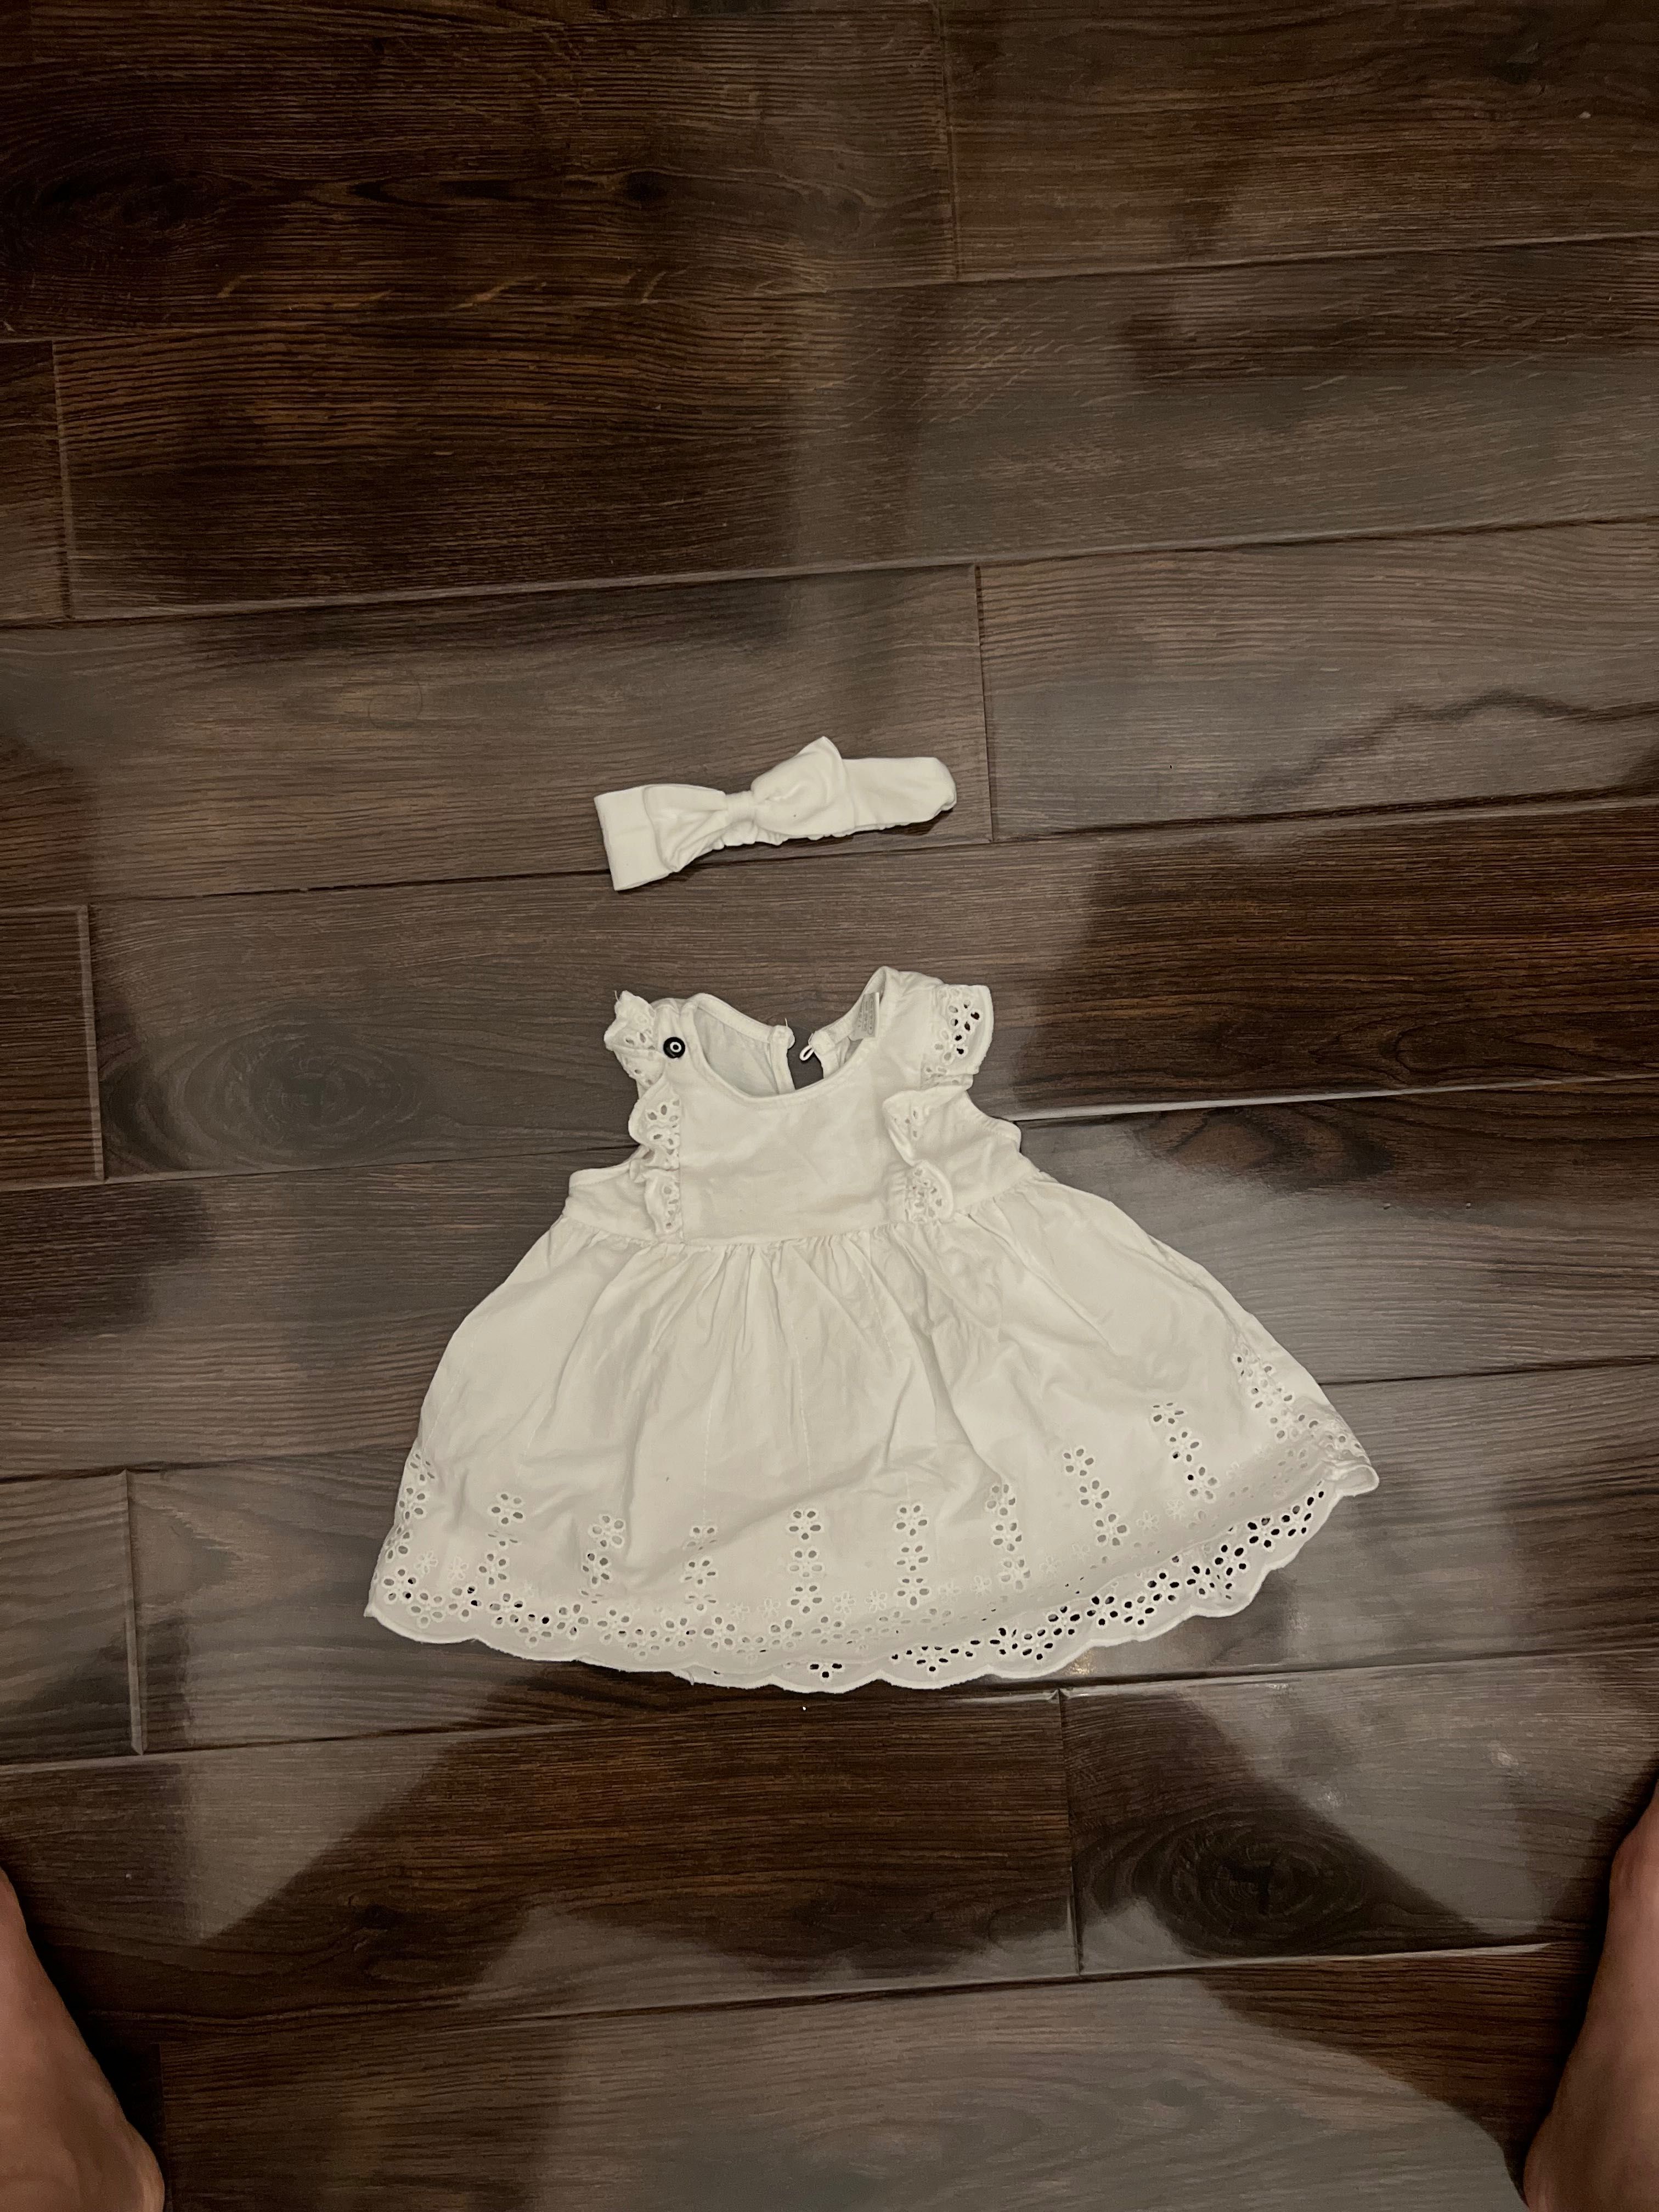 Белое х/б платье для новорожденной девочки 0-3 месяца . Lcwaikiki